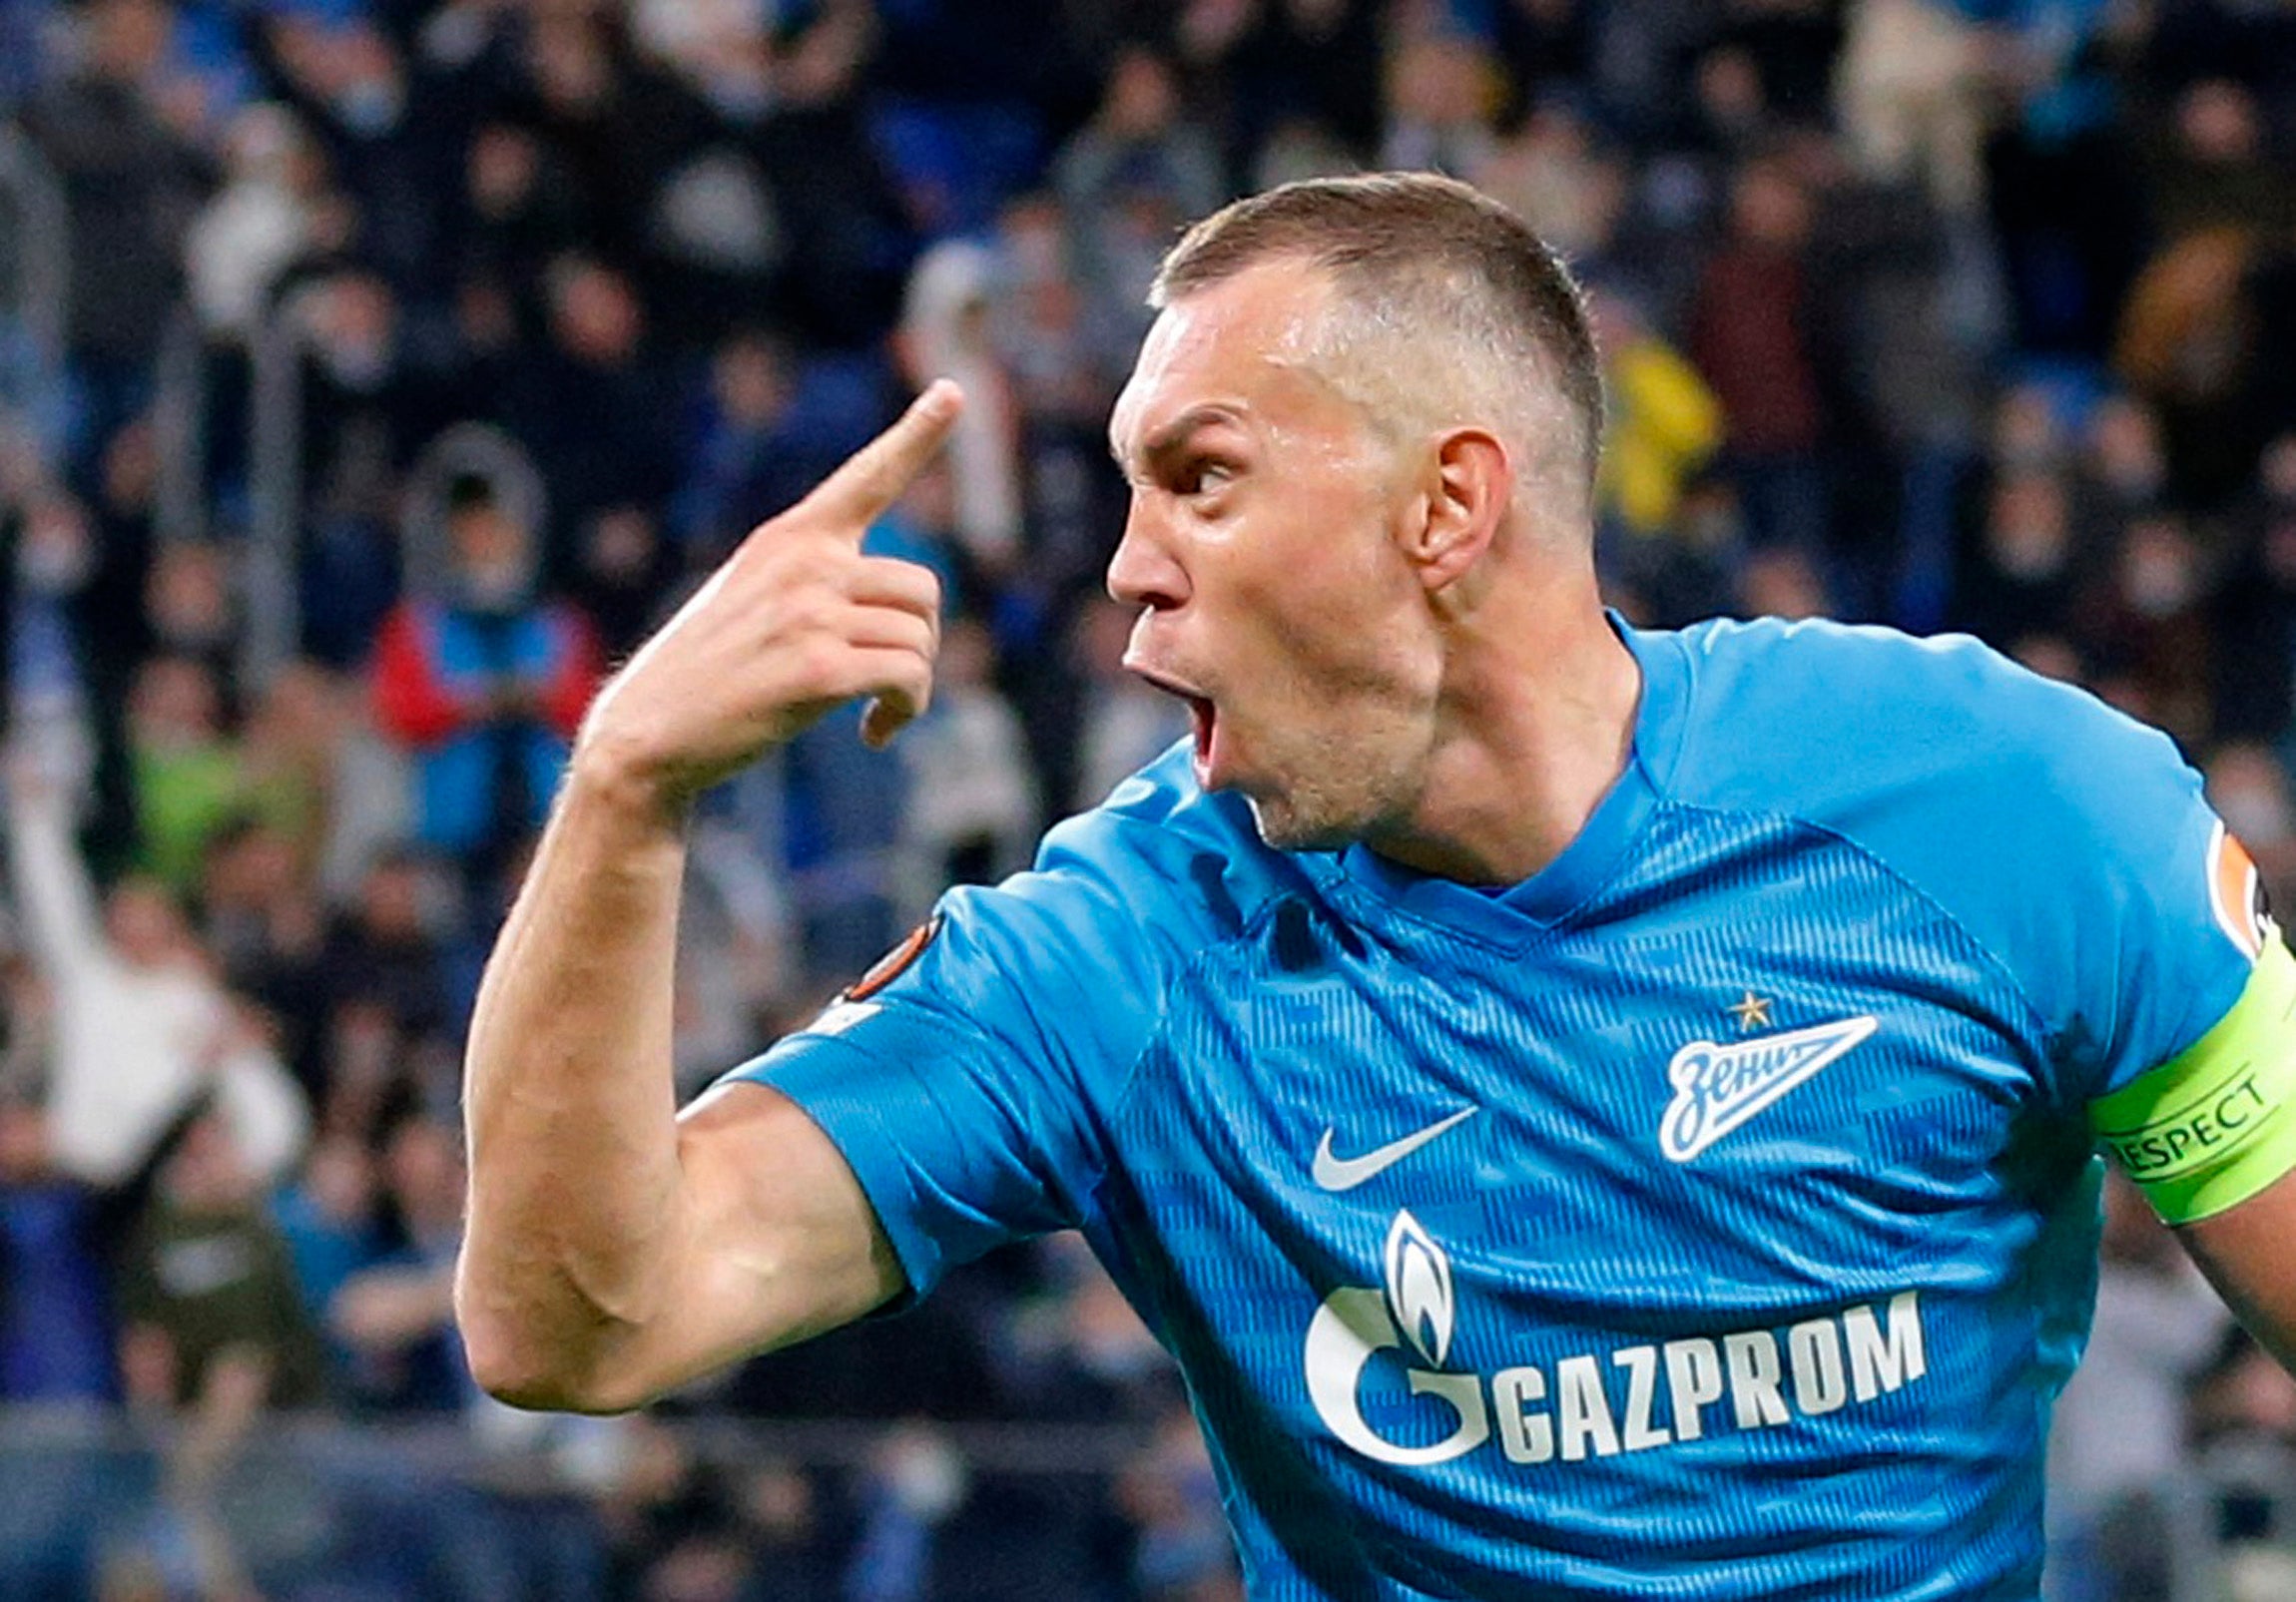 Artem Dzyuba is a striker for Zenit St Petersburg